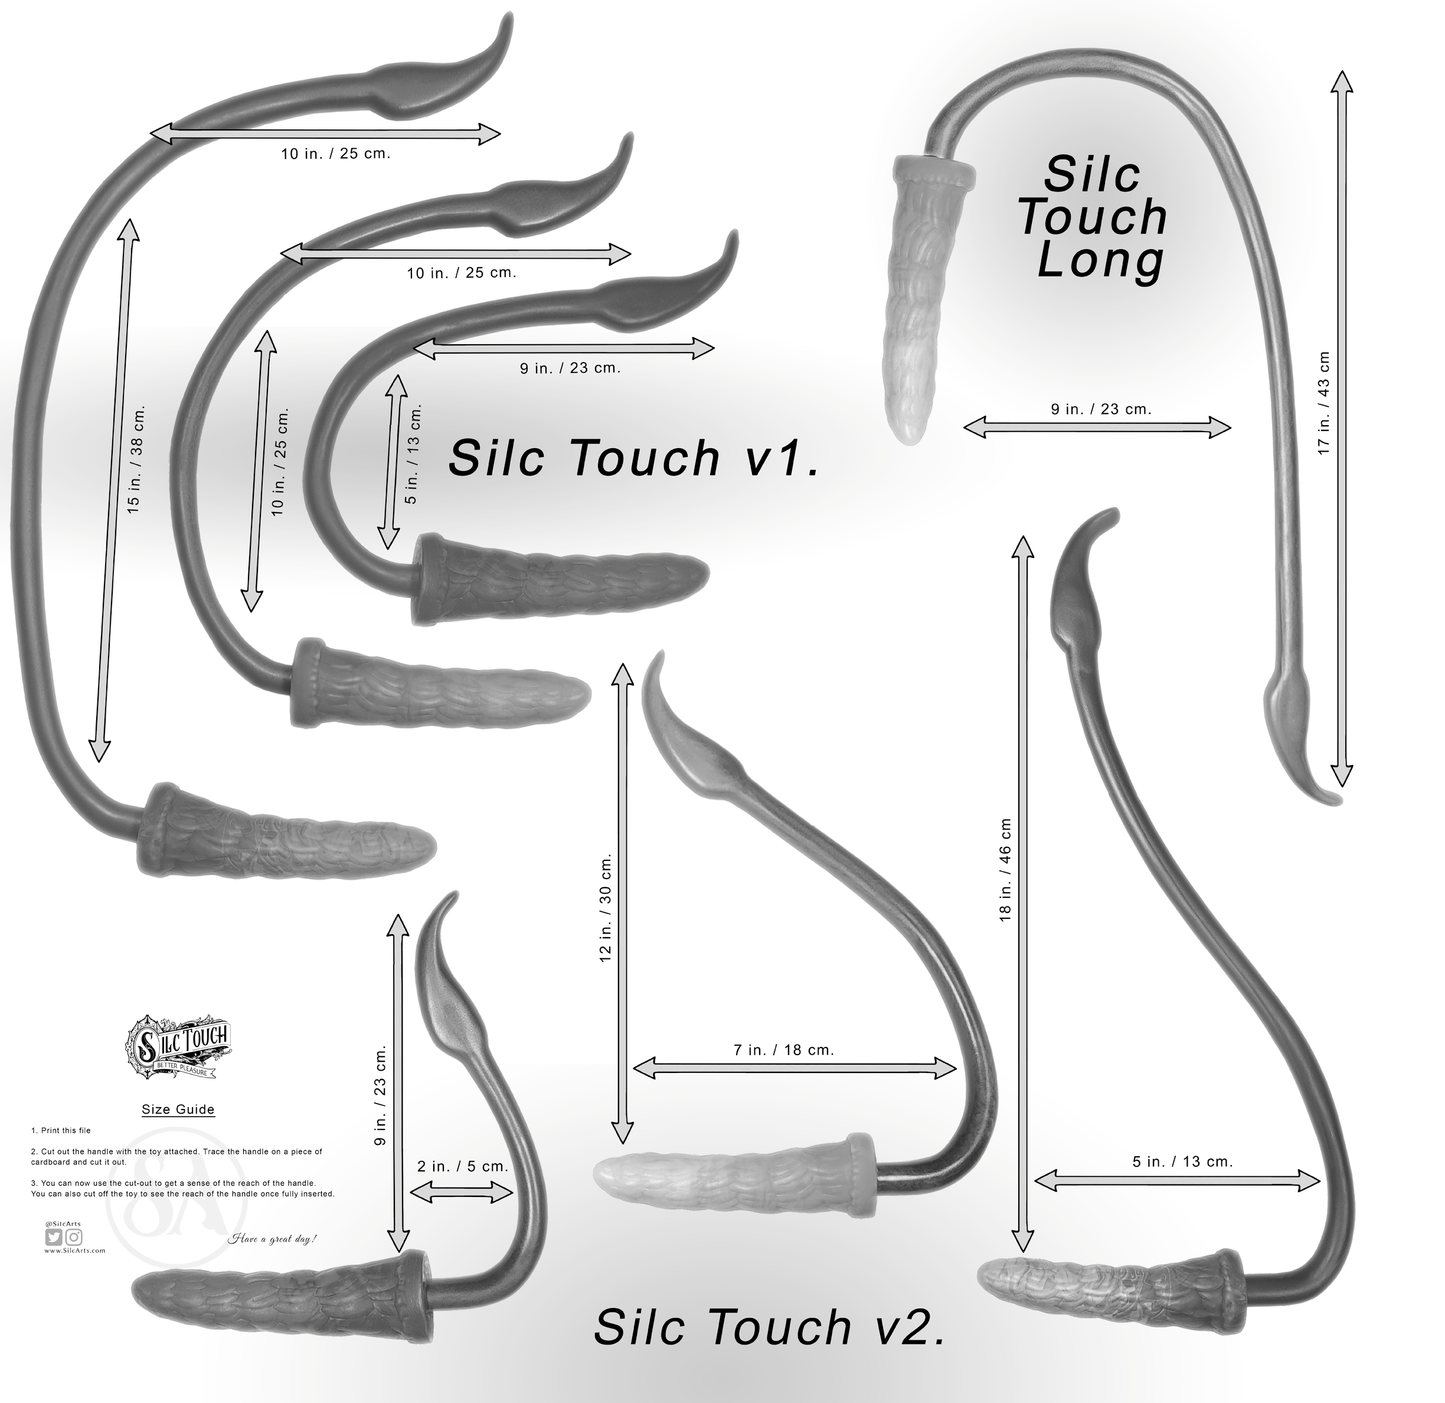 Silc Touch v1. - Ergonomic handle - VacLoc - Long